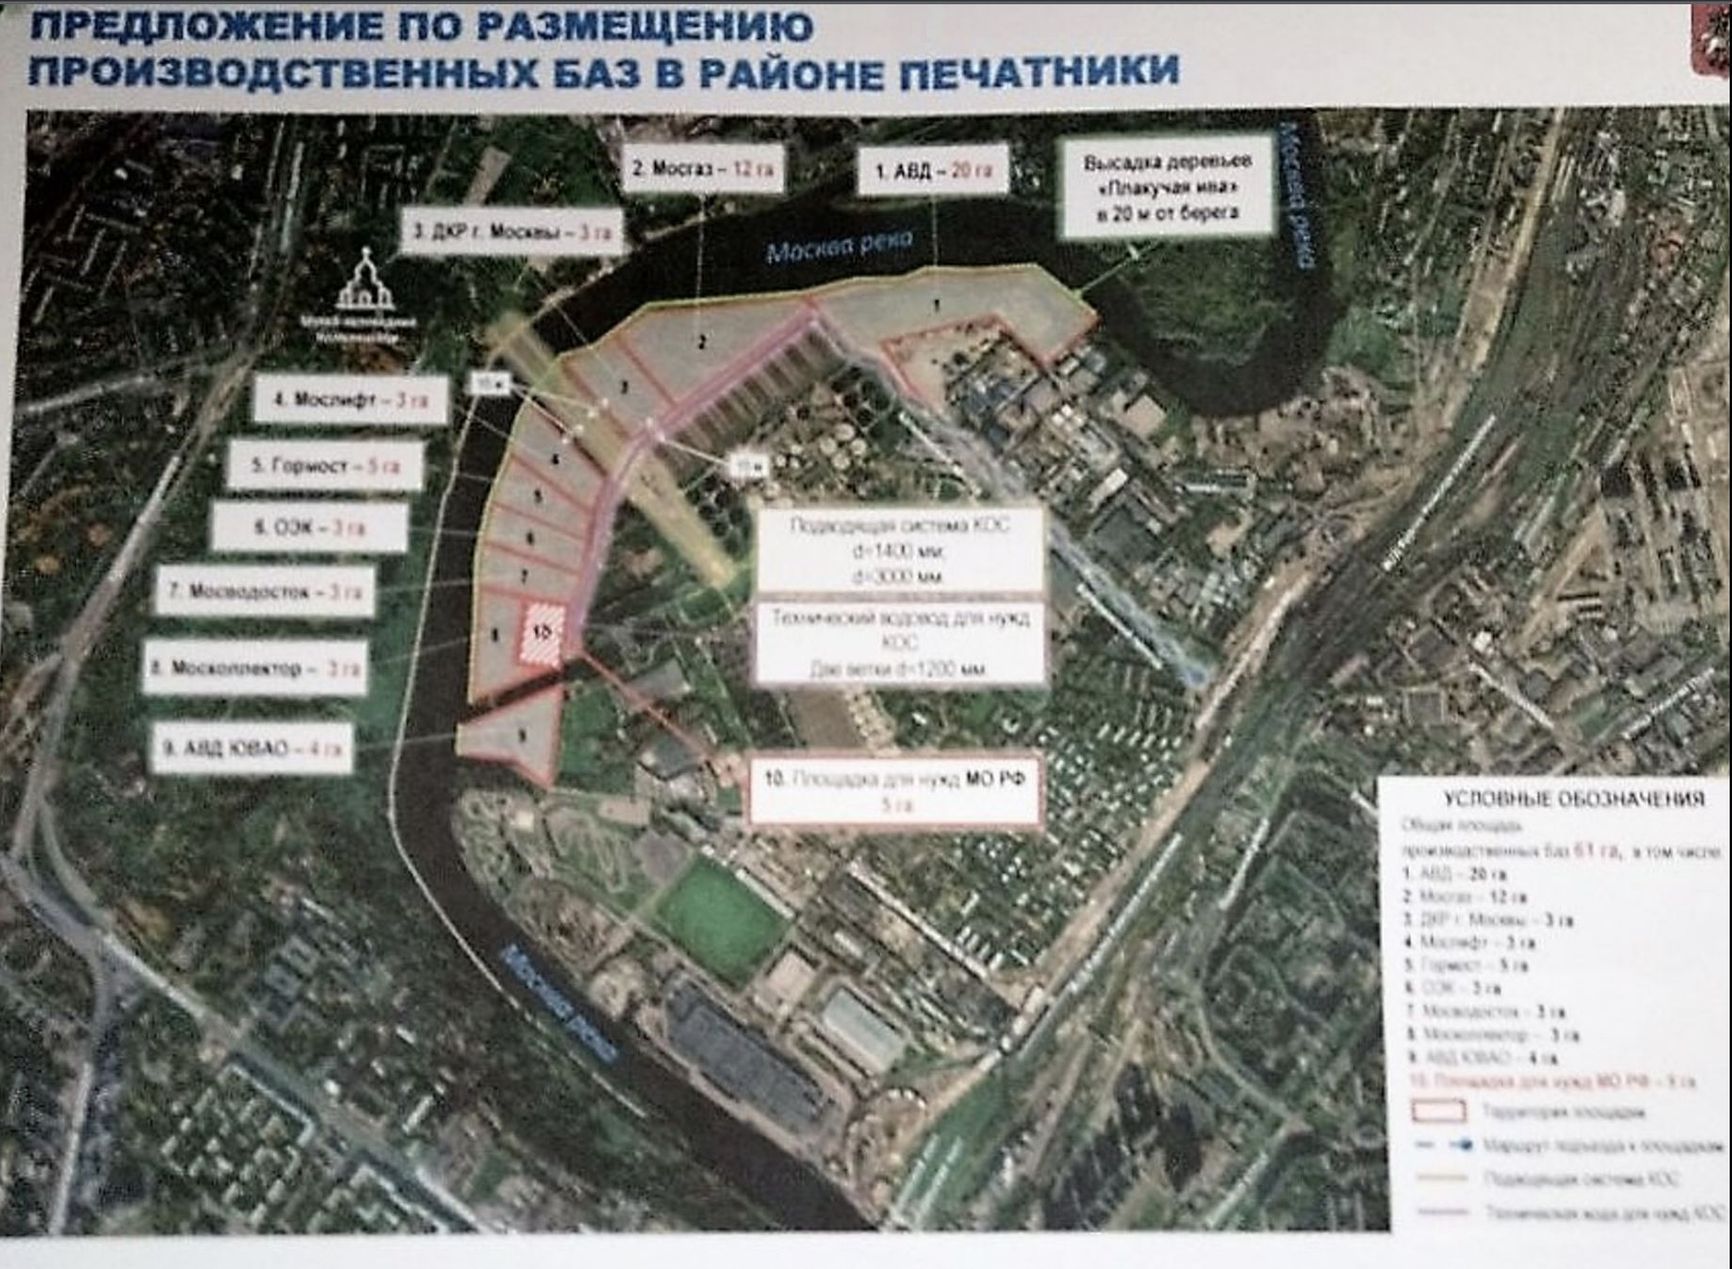 Layout of the sites in Kuryanovo 